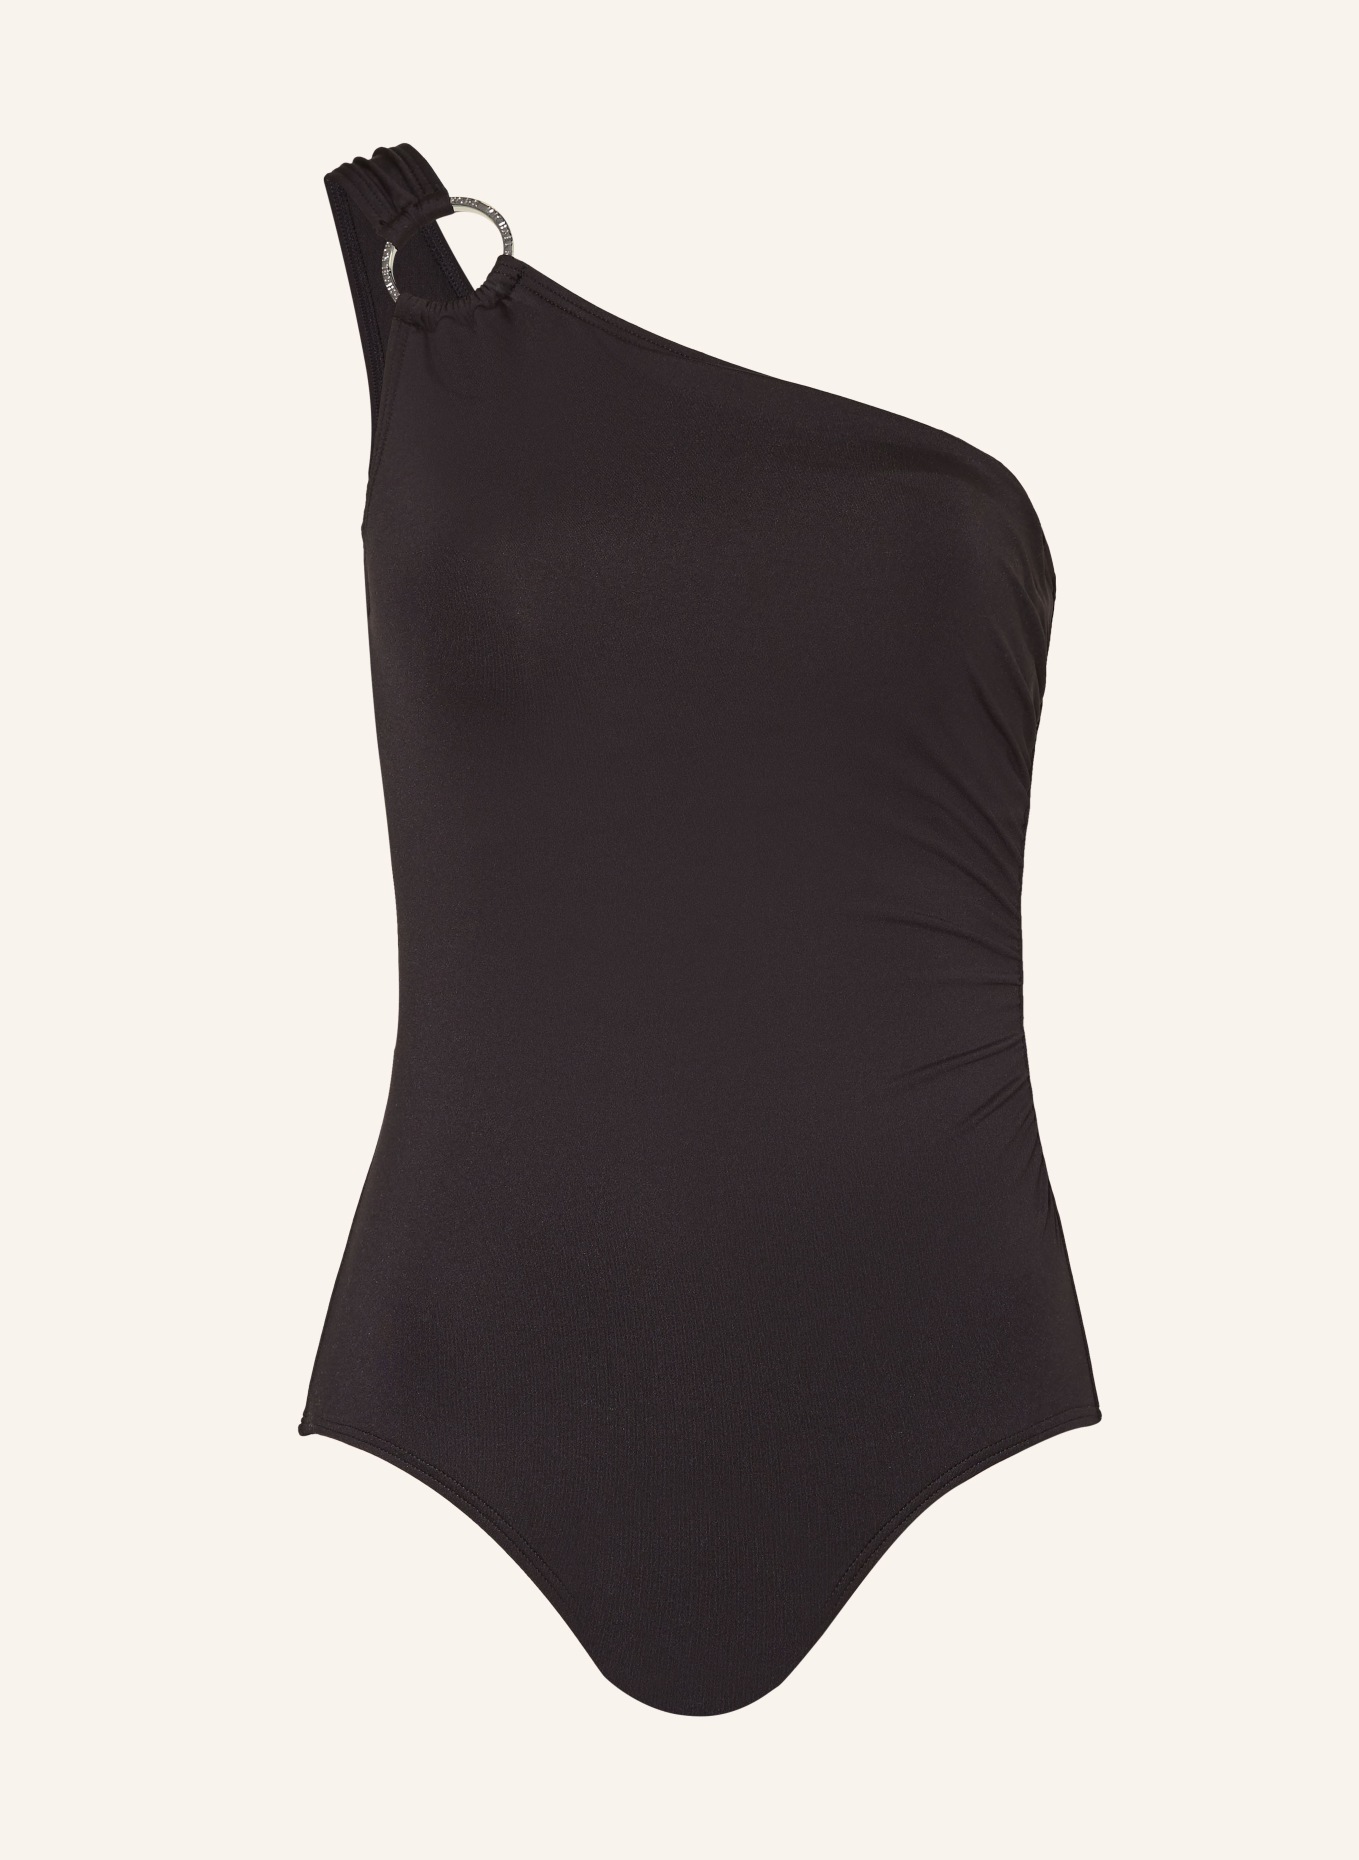 MICHAEL KORS Bügel-Badeanzug HARDWARE SOLIDS, Farbe: SCHWARZ (Bild 1)